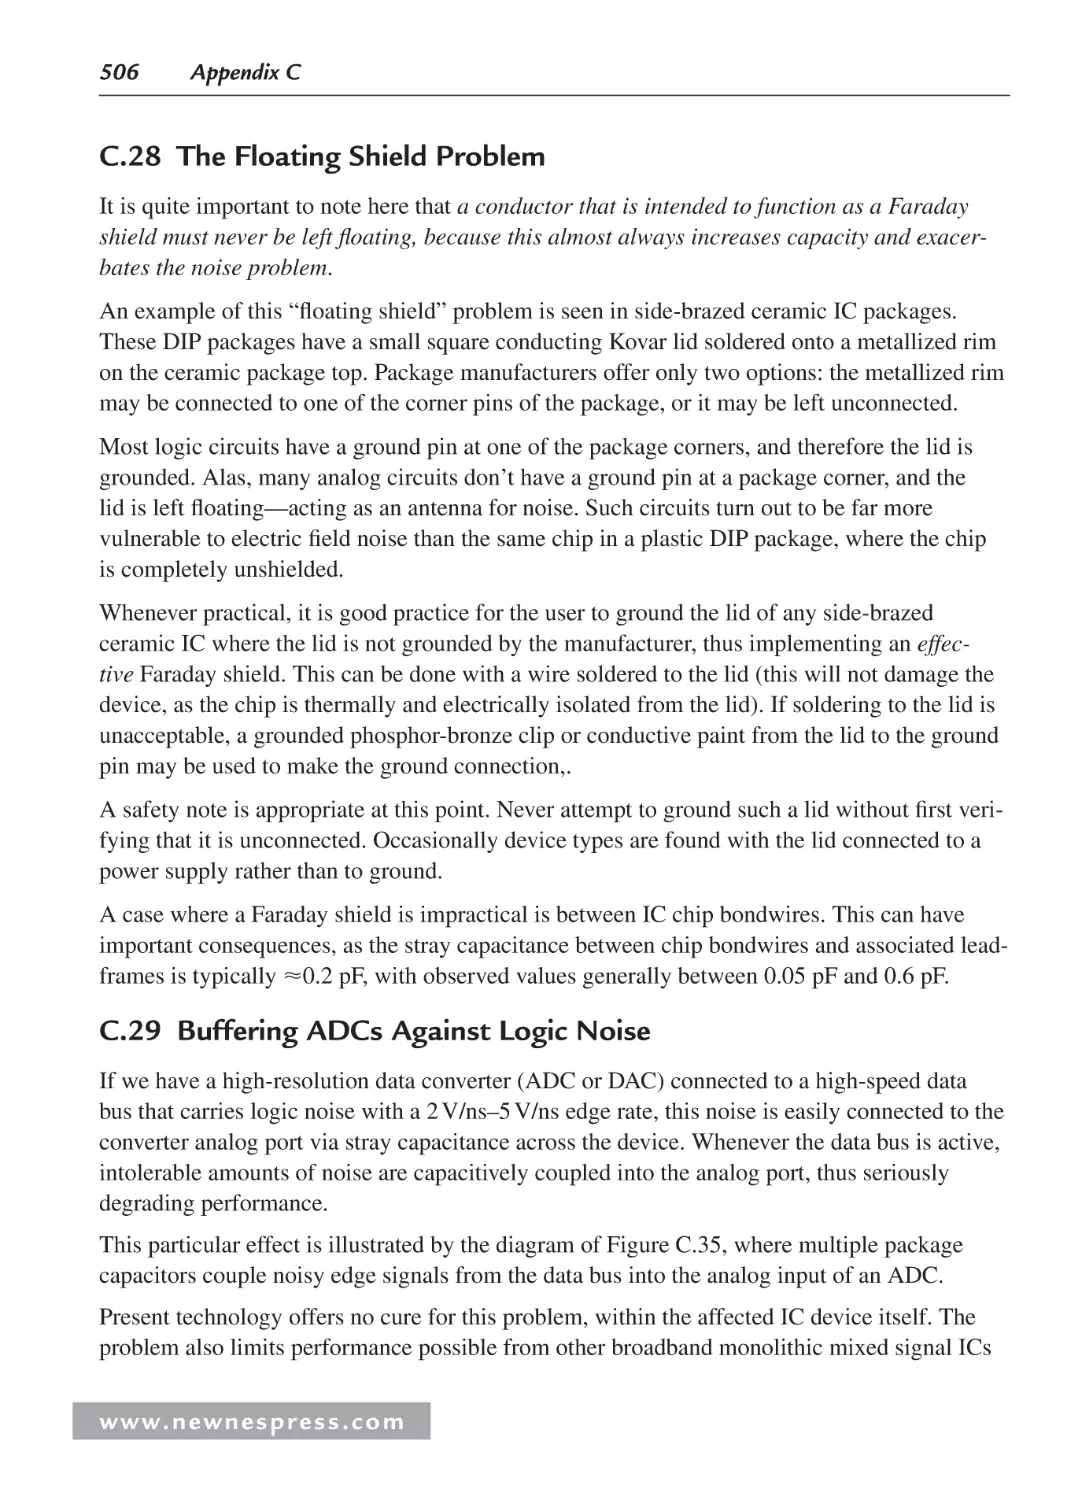 C.28 The Floating Shield Problem
C.29 Buffering ADCs Against Logic Noise